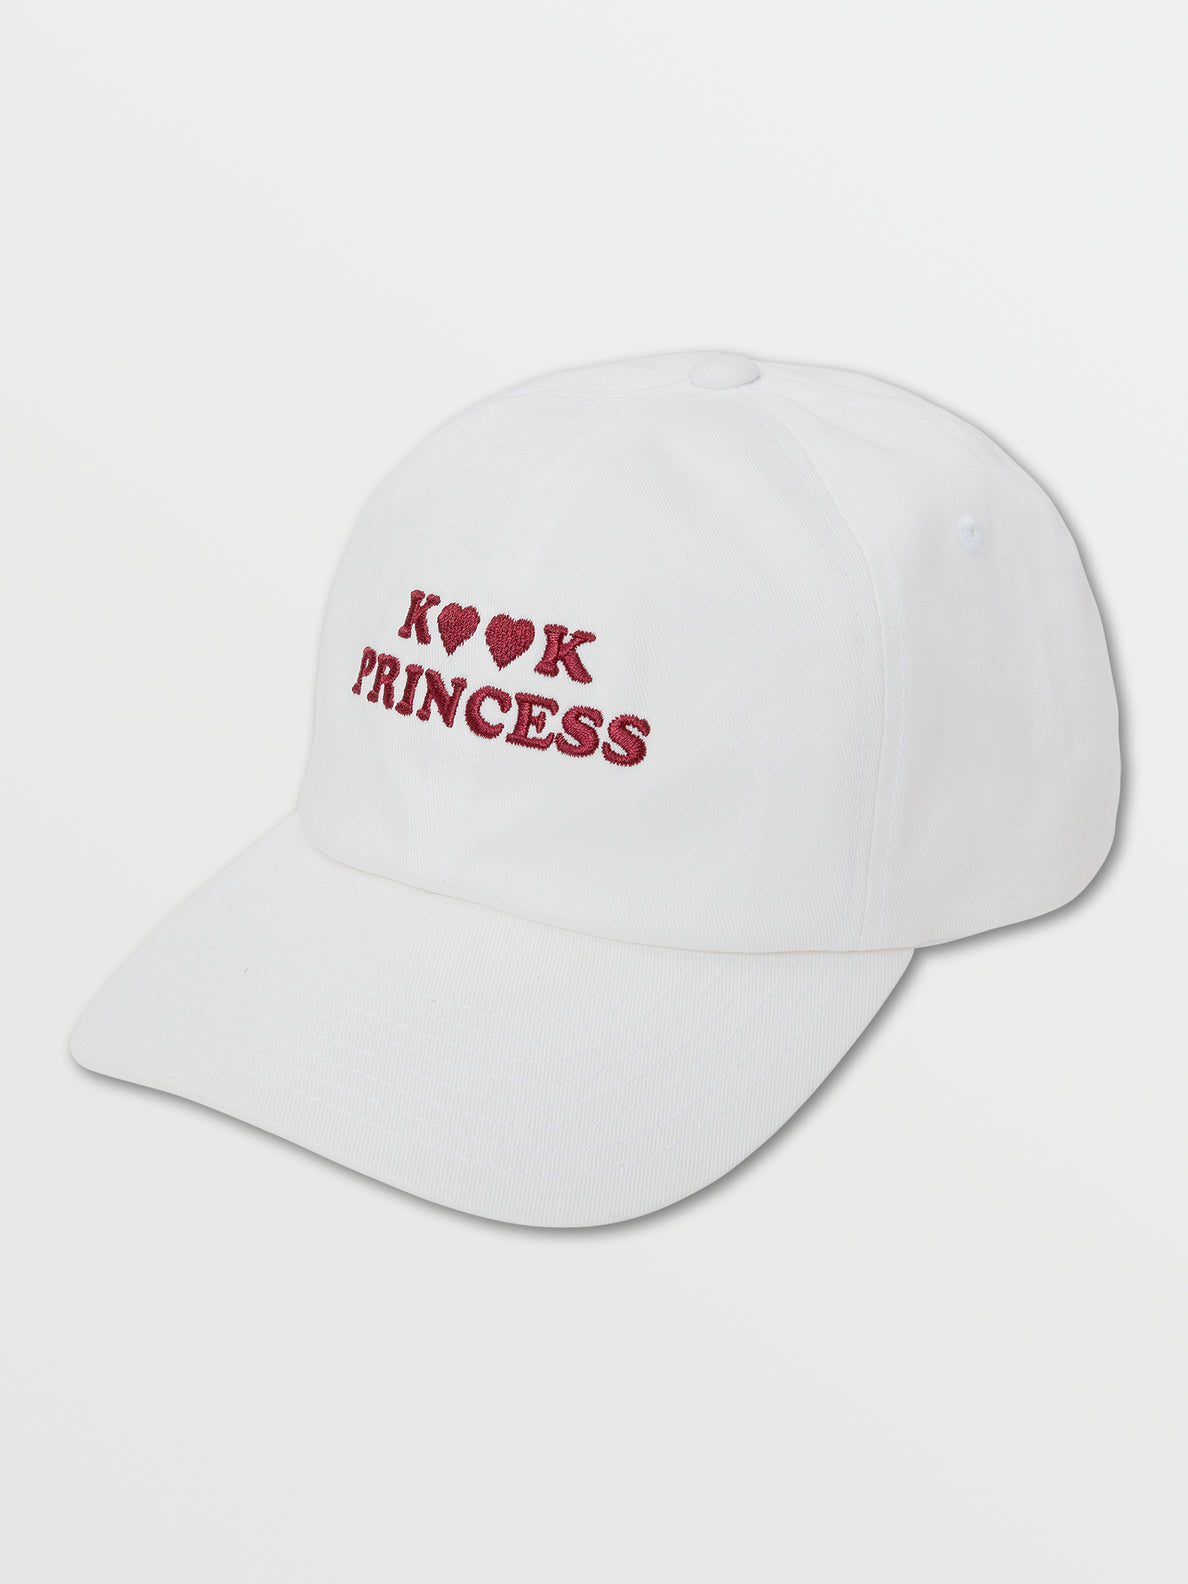 Outer Banks Kook Dad Cap - Volcom x Hats – Volcom